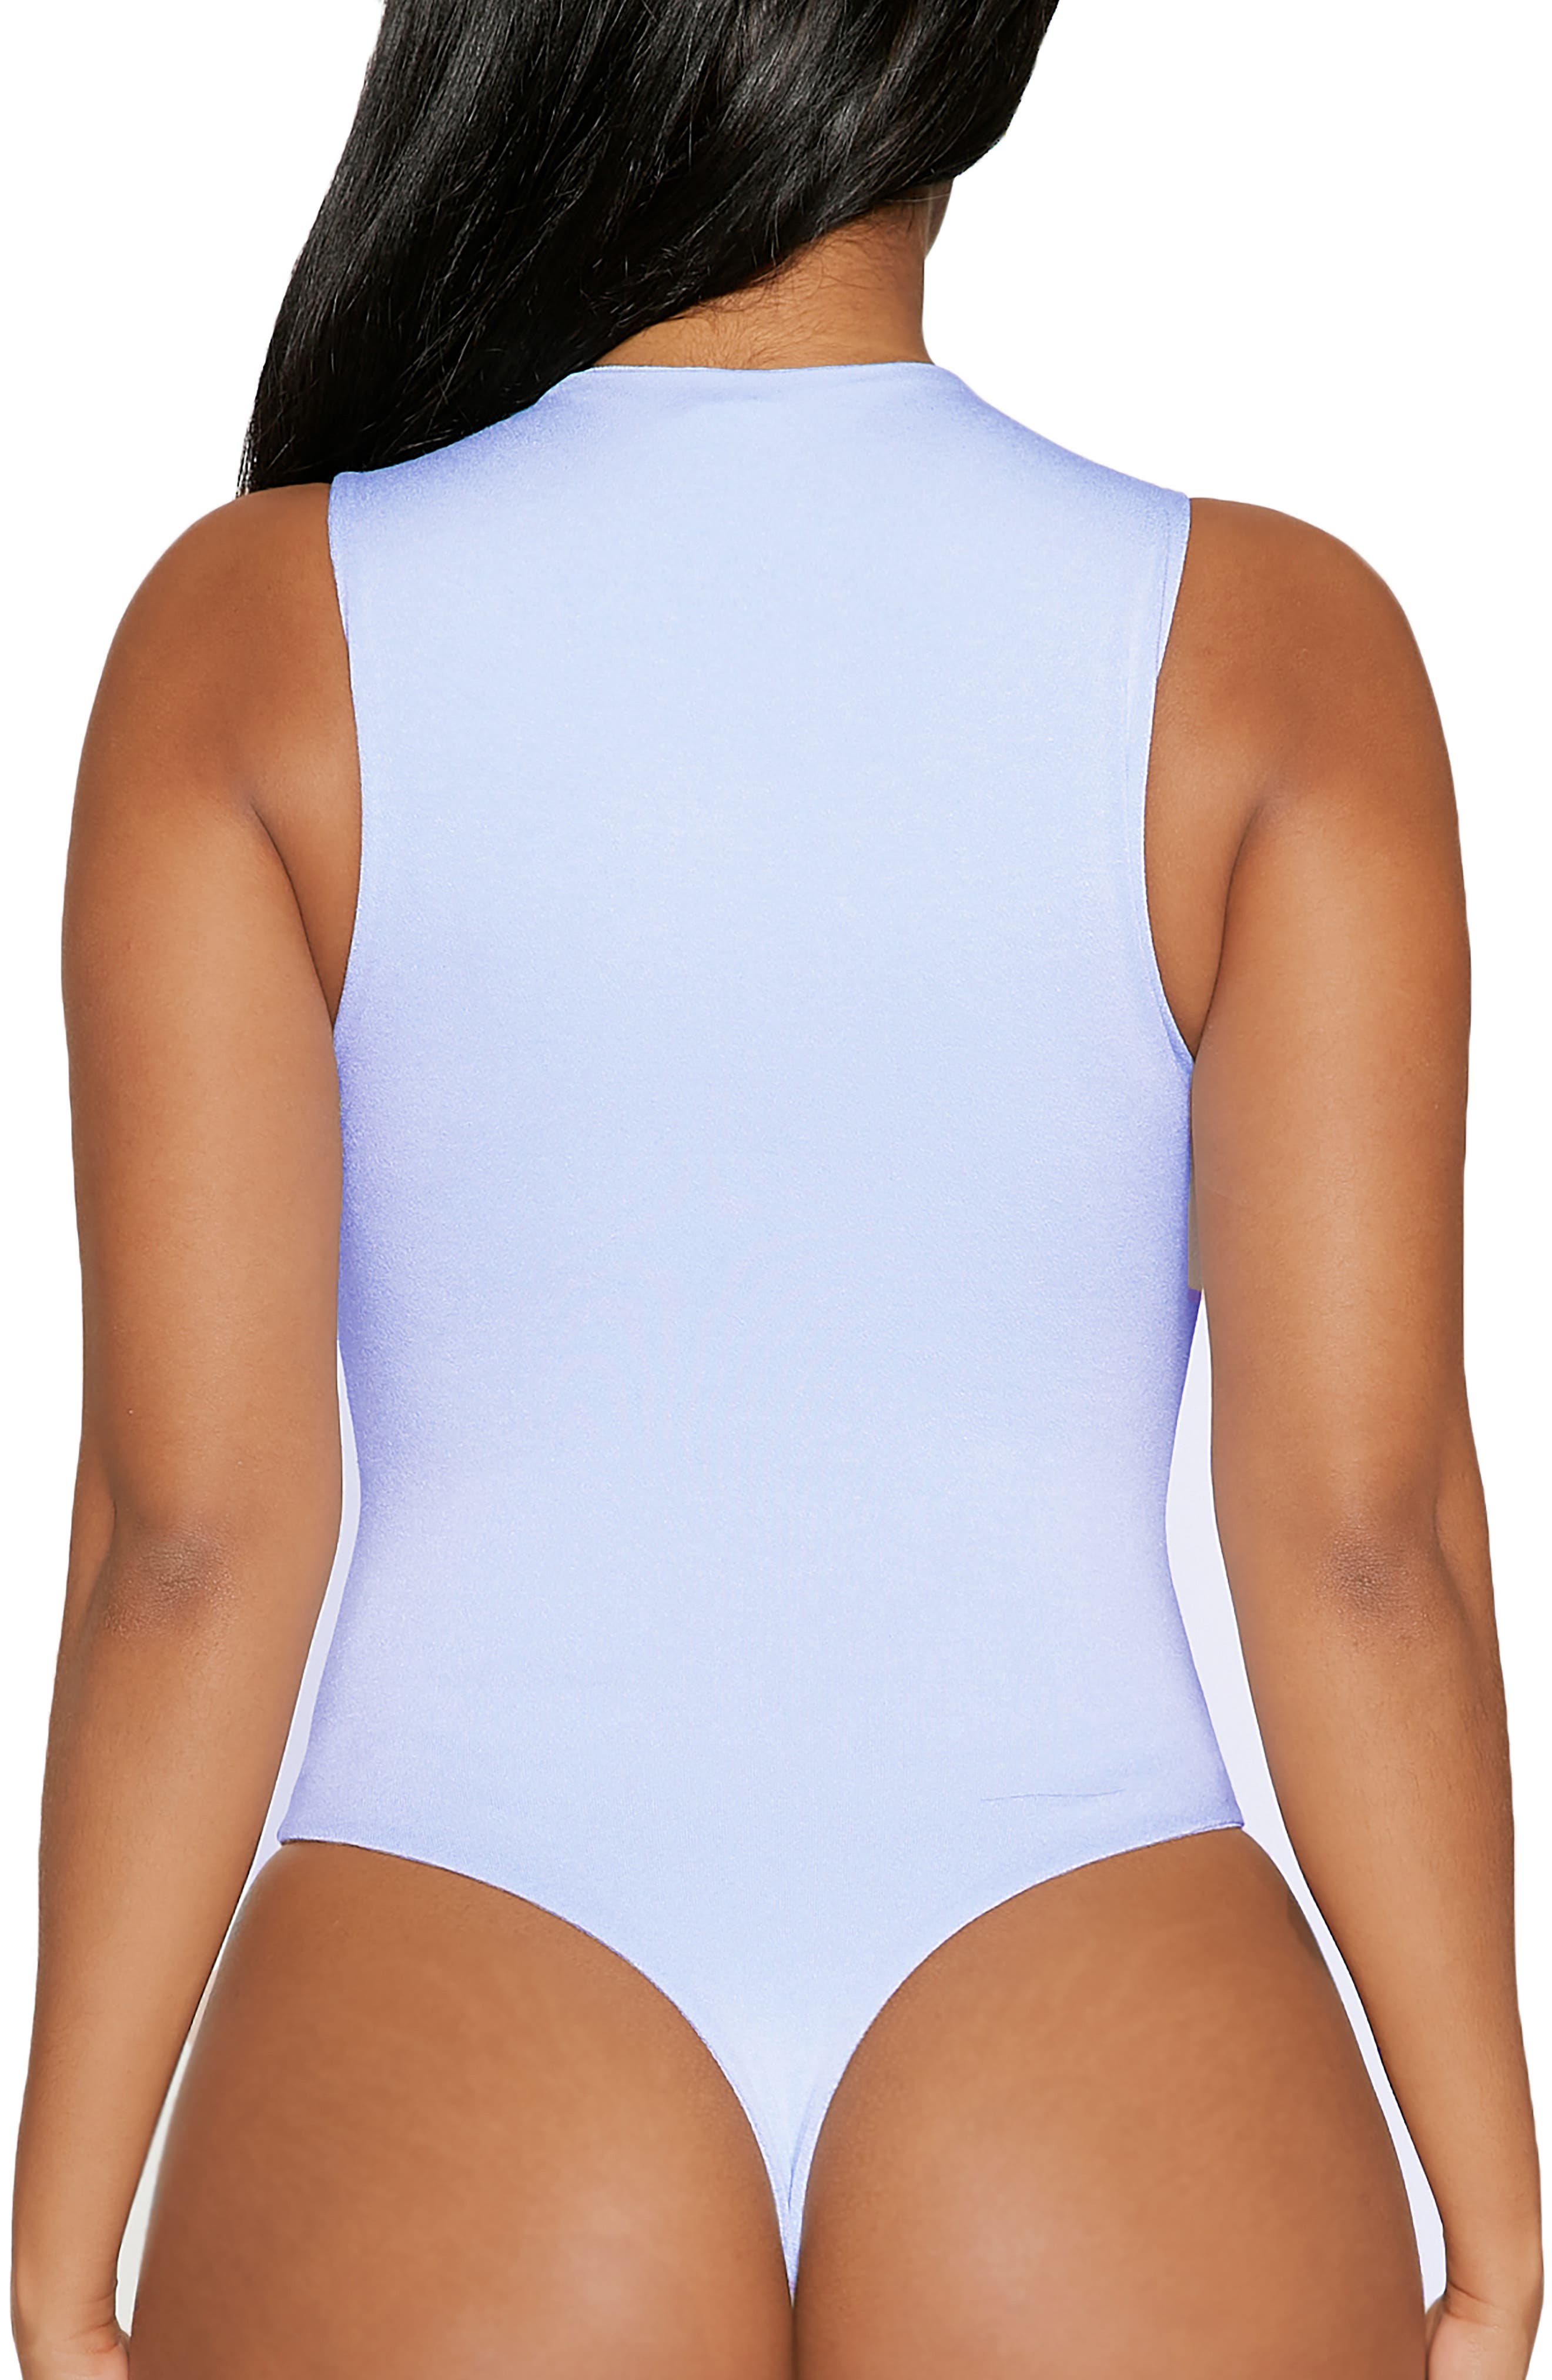 Naked Wardrobe Jersey Sleeveless Bodysuit in Chocolate at Nordstrom, Size  Medium